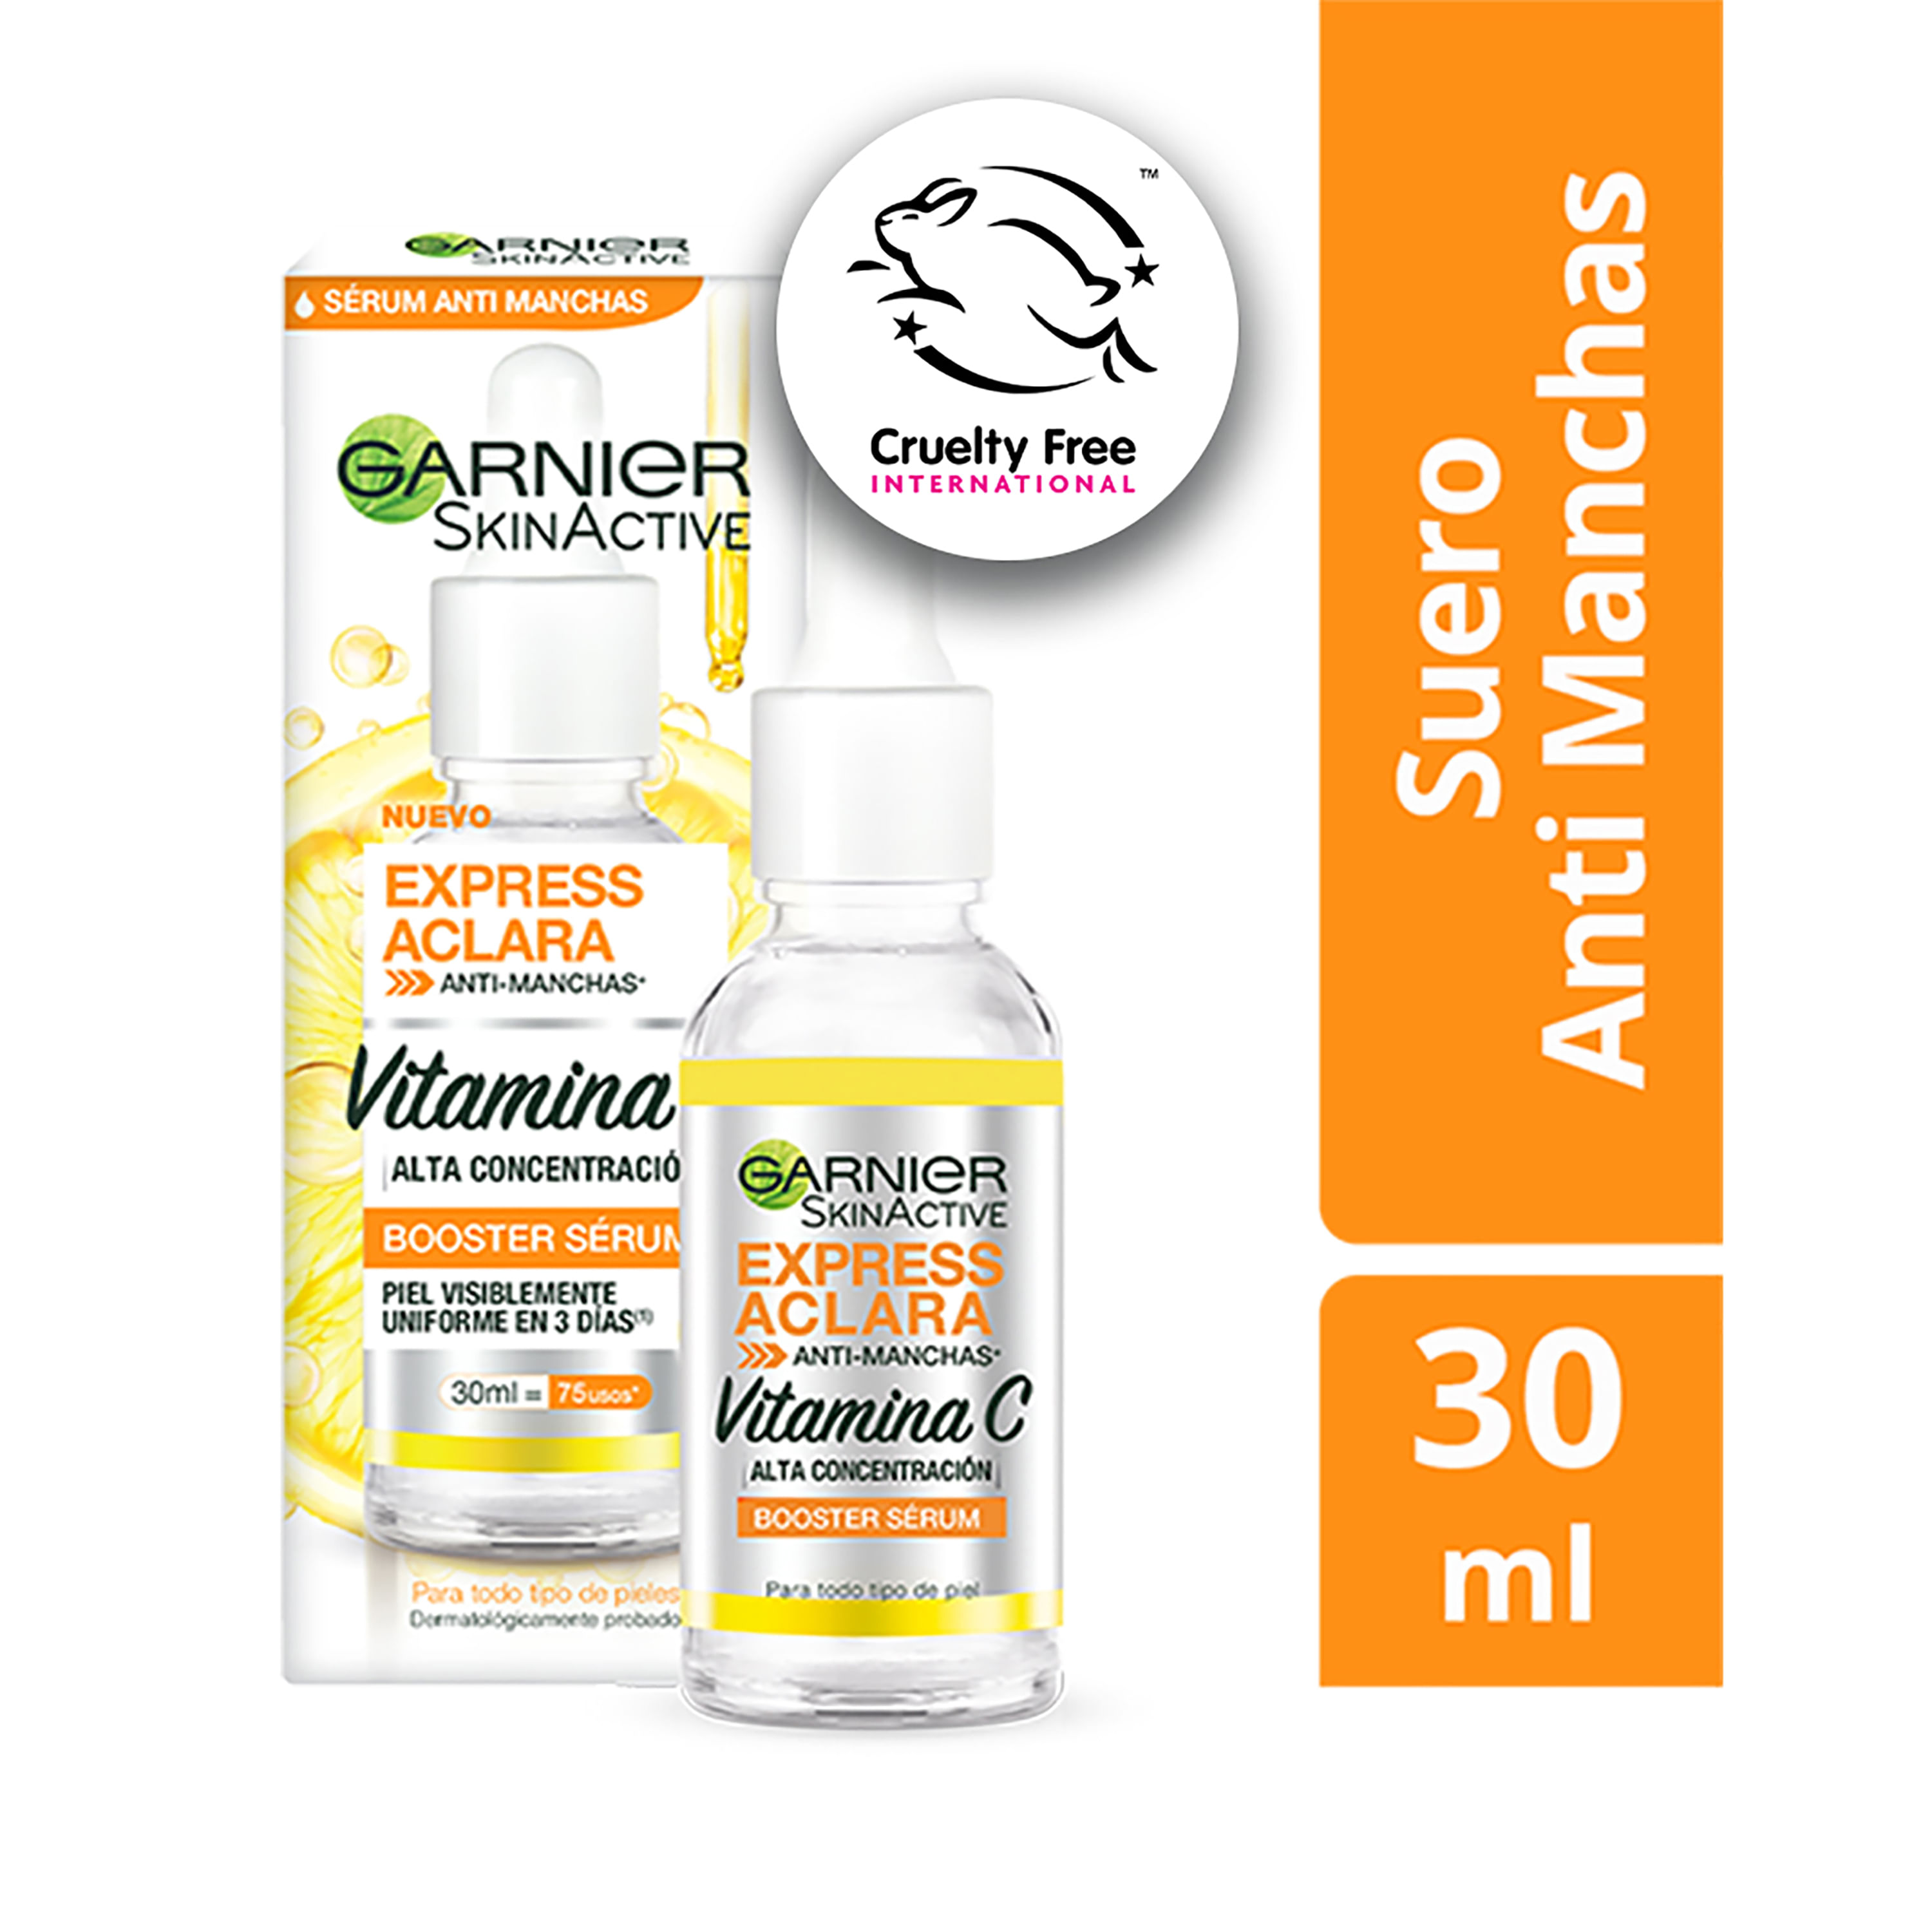 Express-Aclara-Serum-Antimanchas-Garnier-Vitamina-C-30ml-1-74598